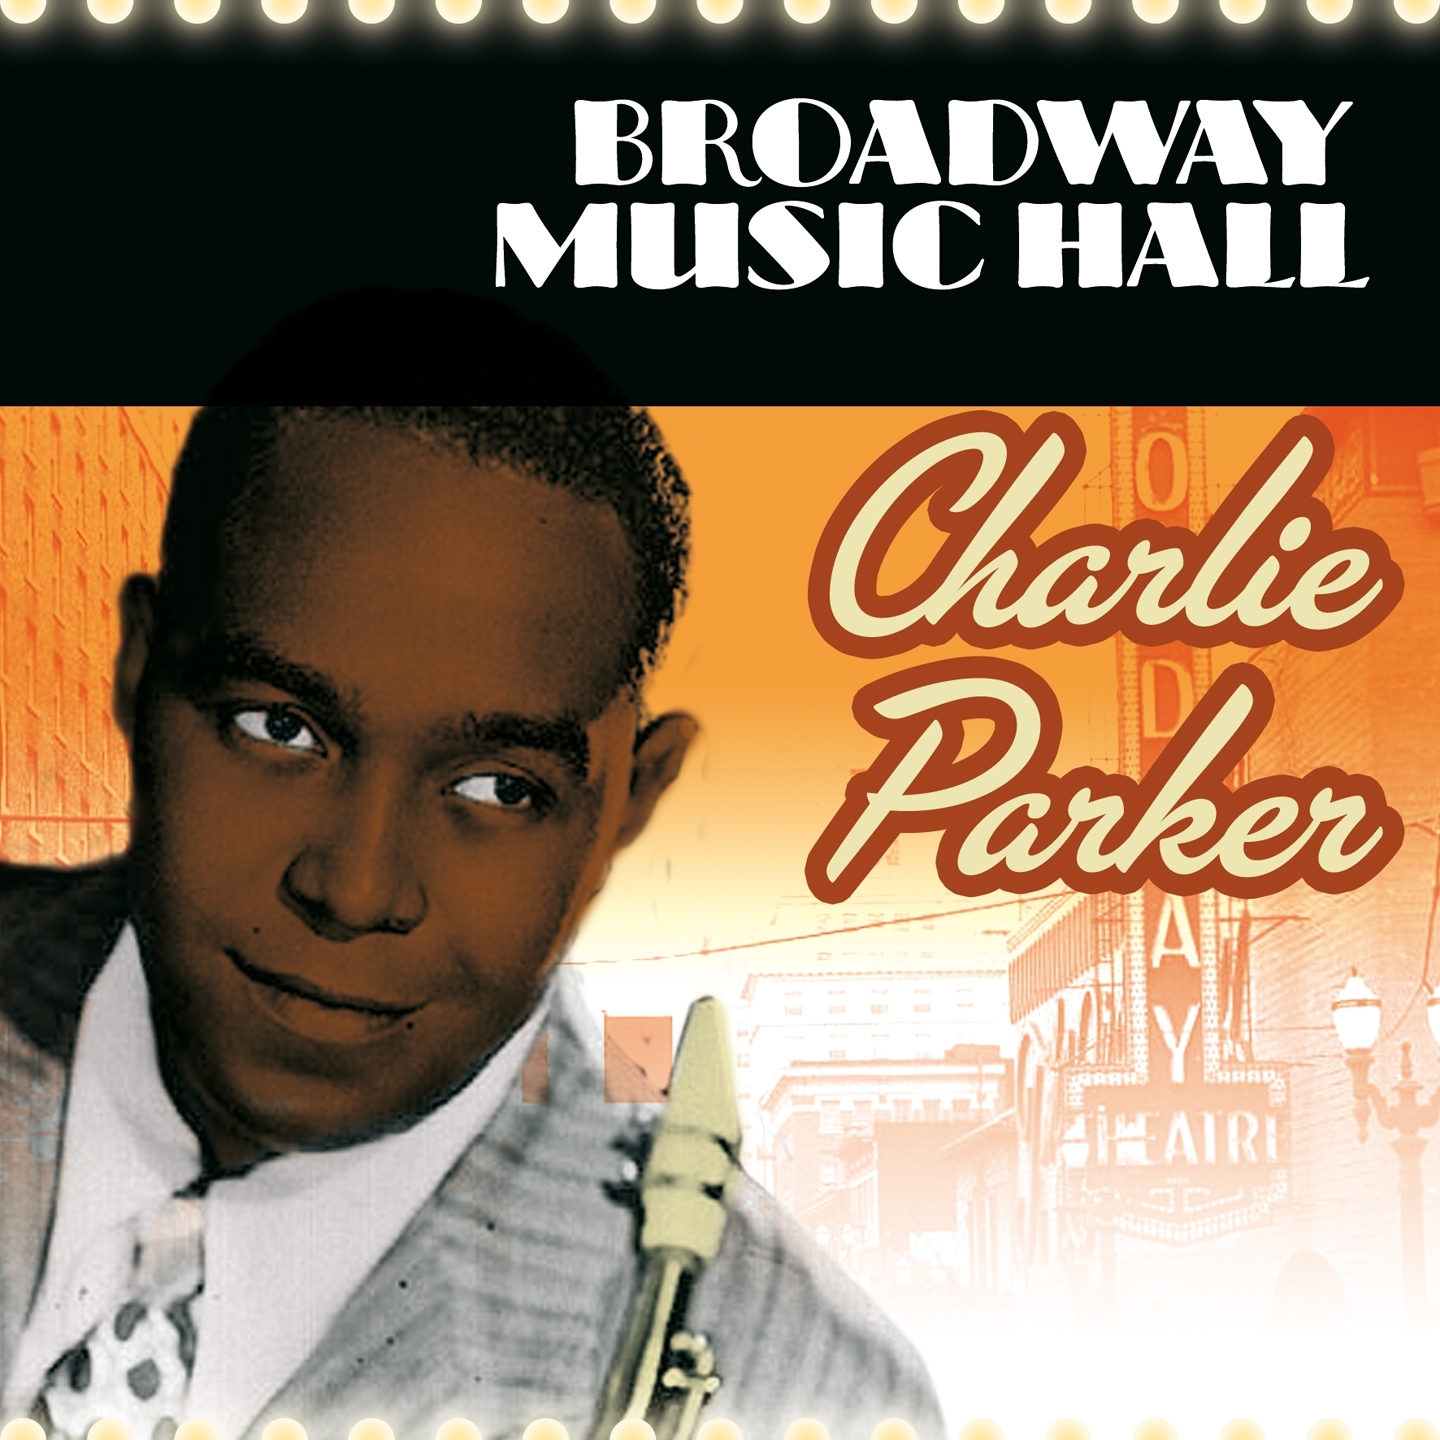 Broadway Music Hall - Charlie Parker